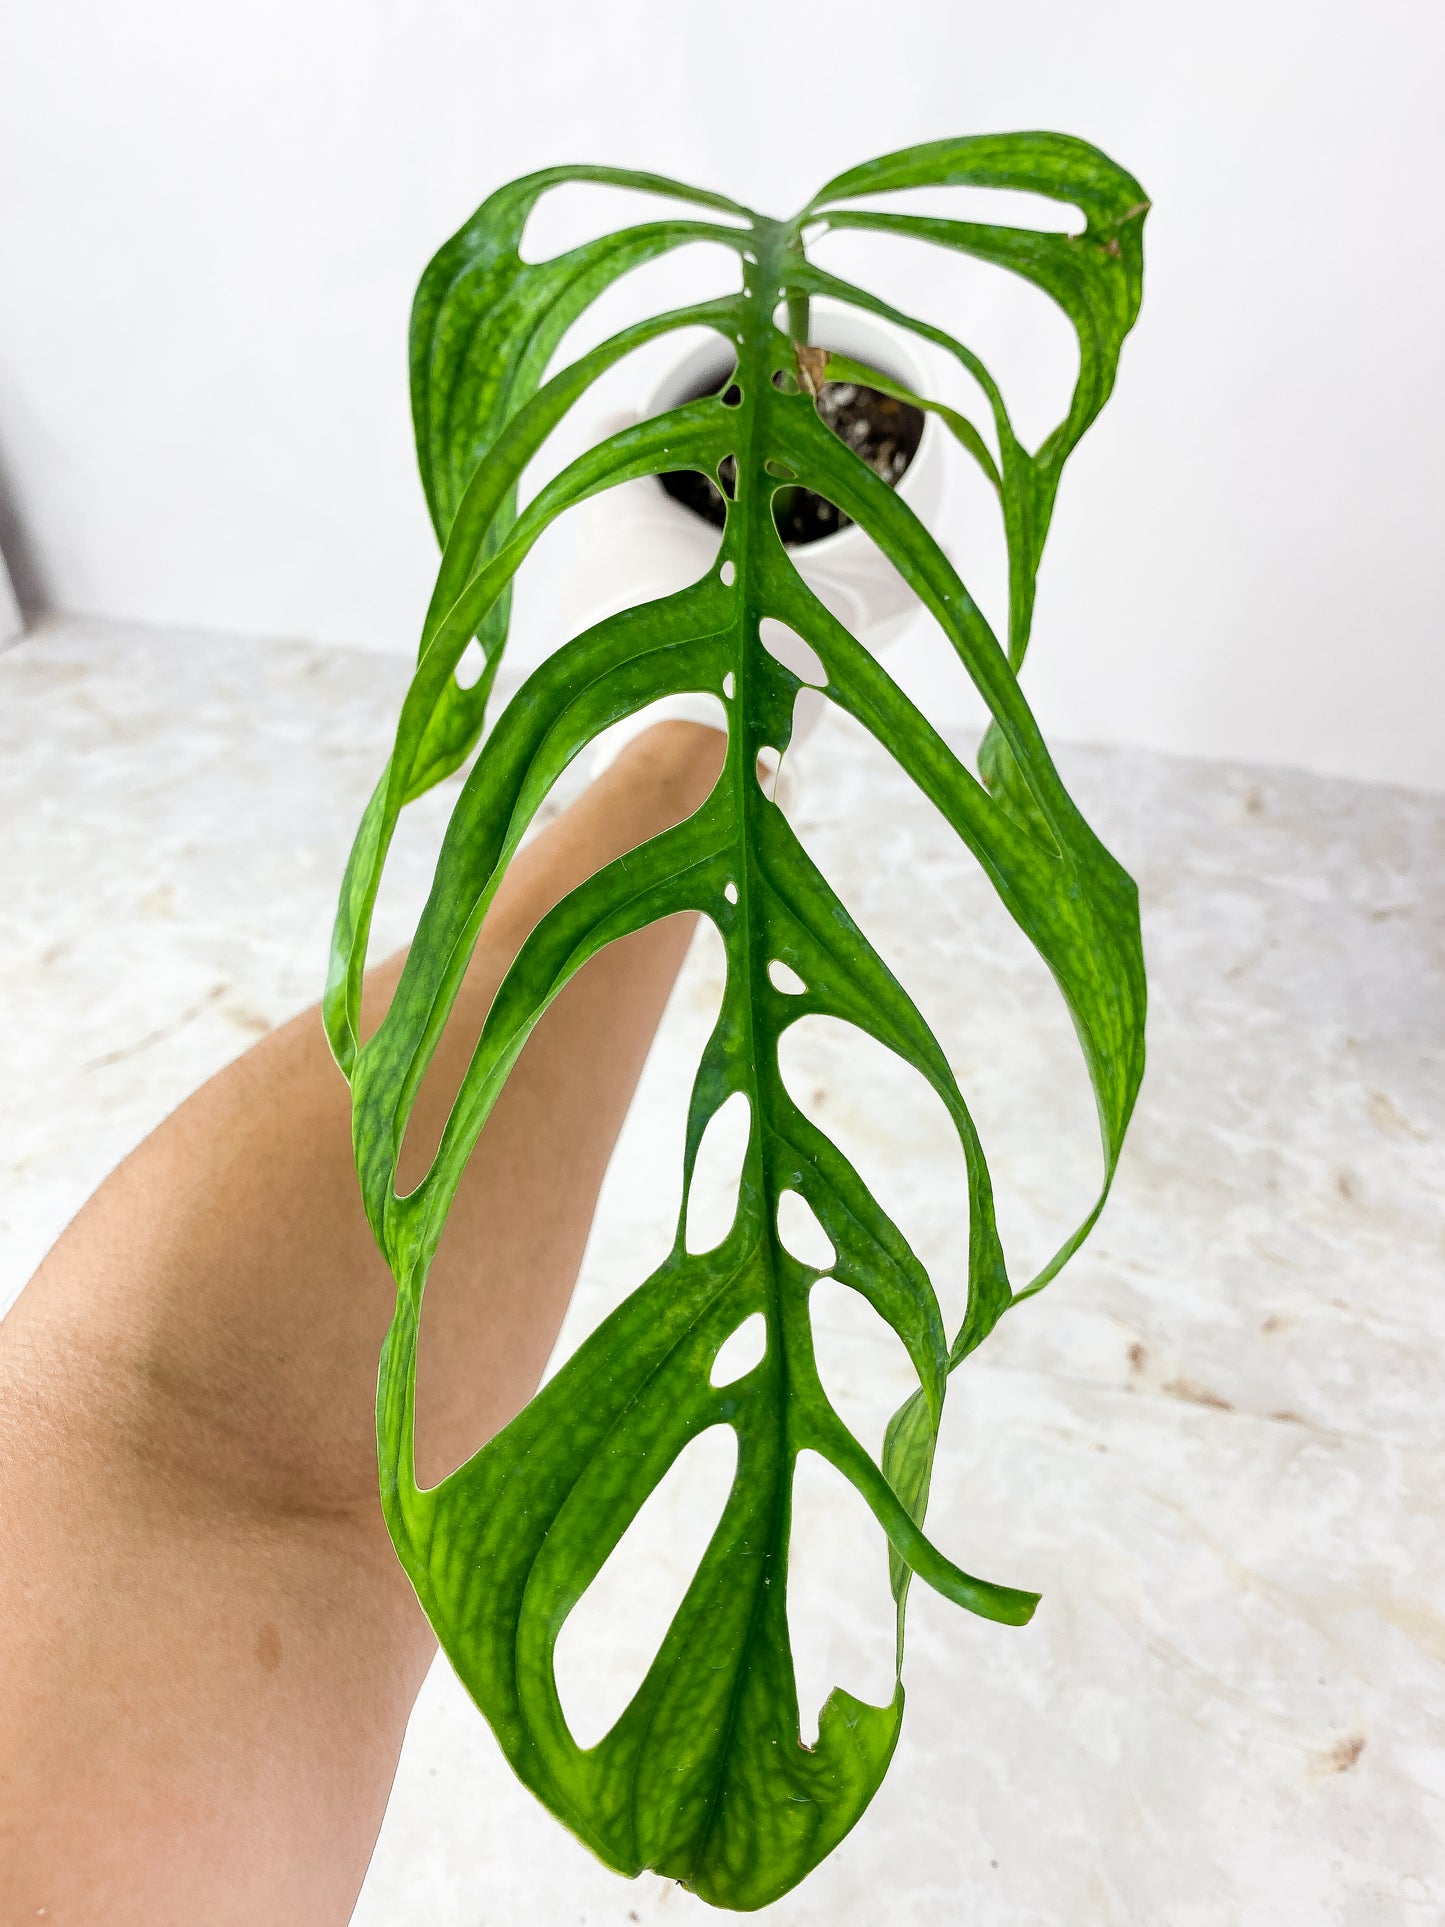 Monstera Esqueleto  Slightly Rooted Cutting XL 1 leaf